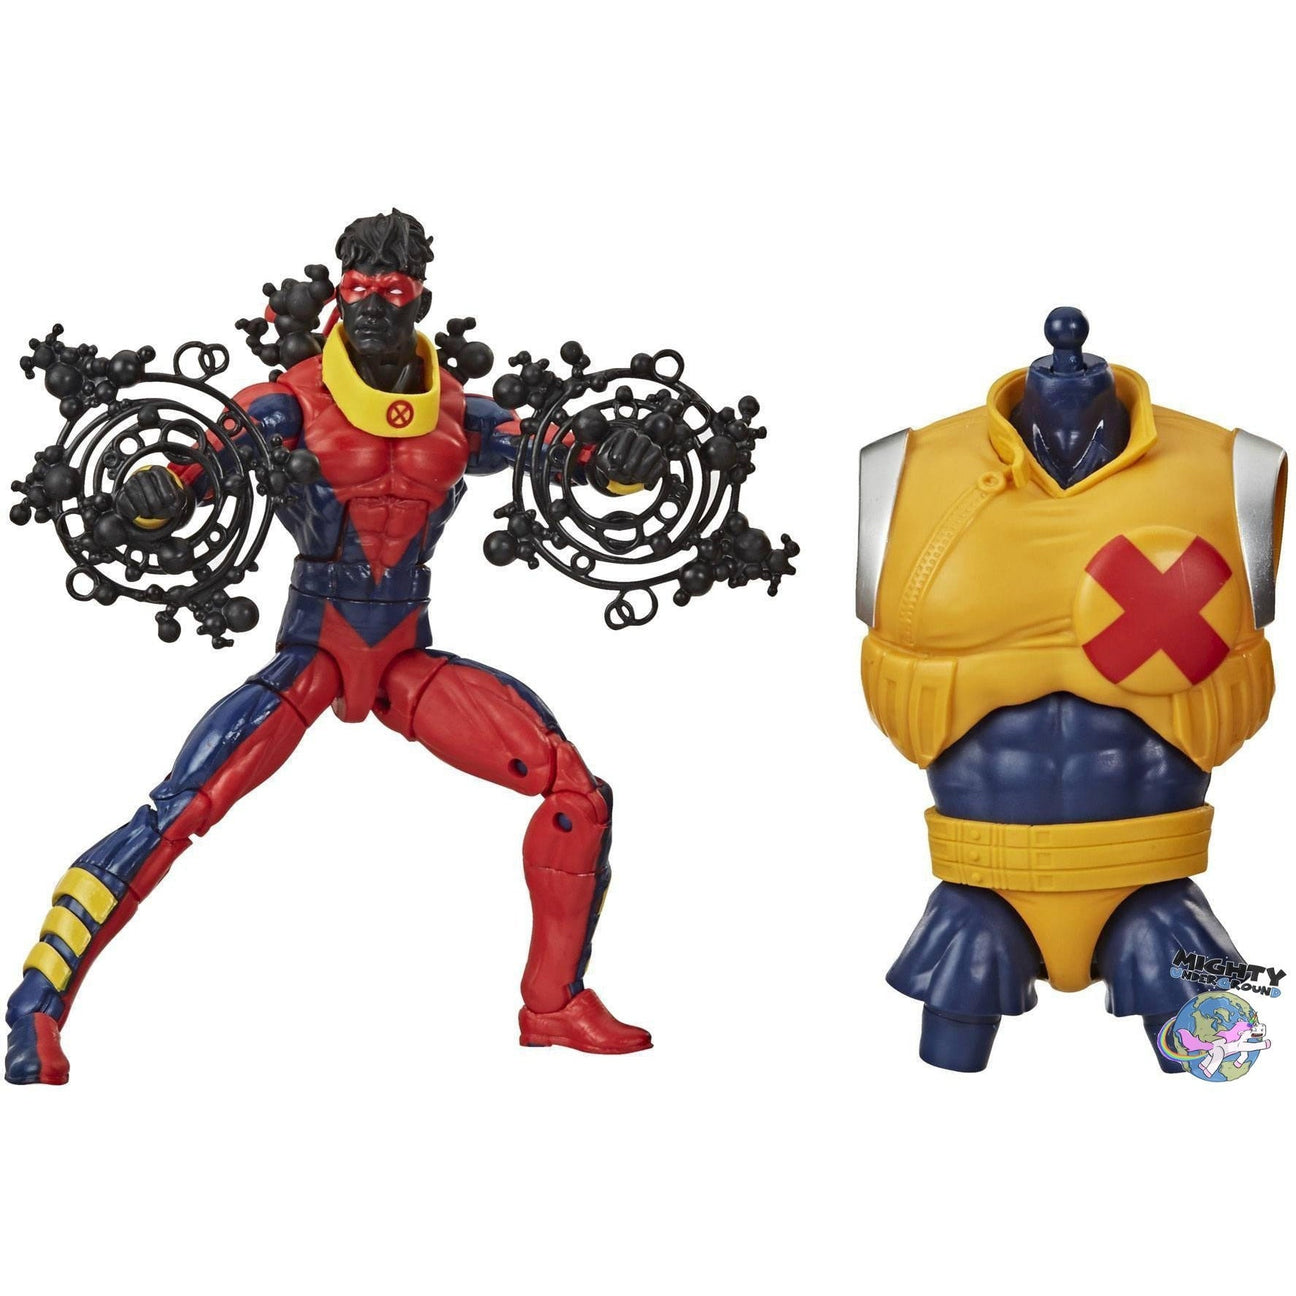 Marvel Legends: Deadpool (Strong Guy Wave) VORBESTELLUNG!-Actionfigur-Hasbro-mighty-underground